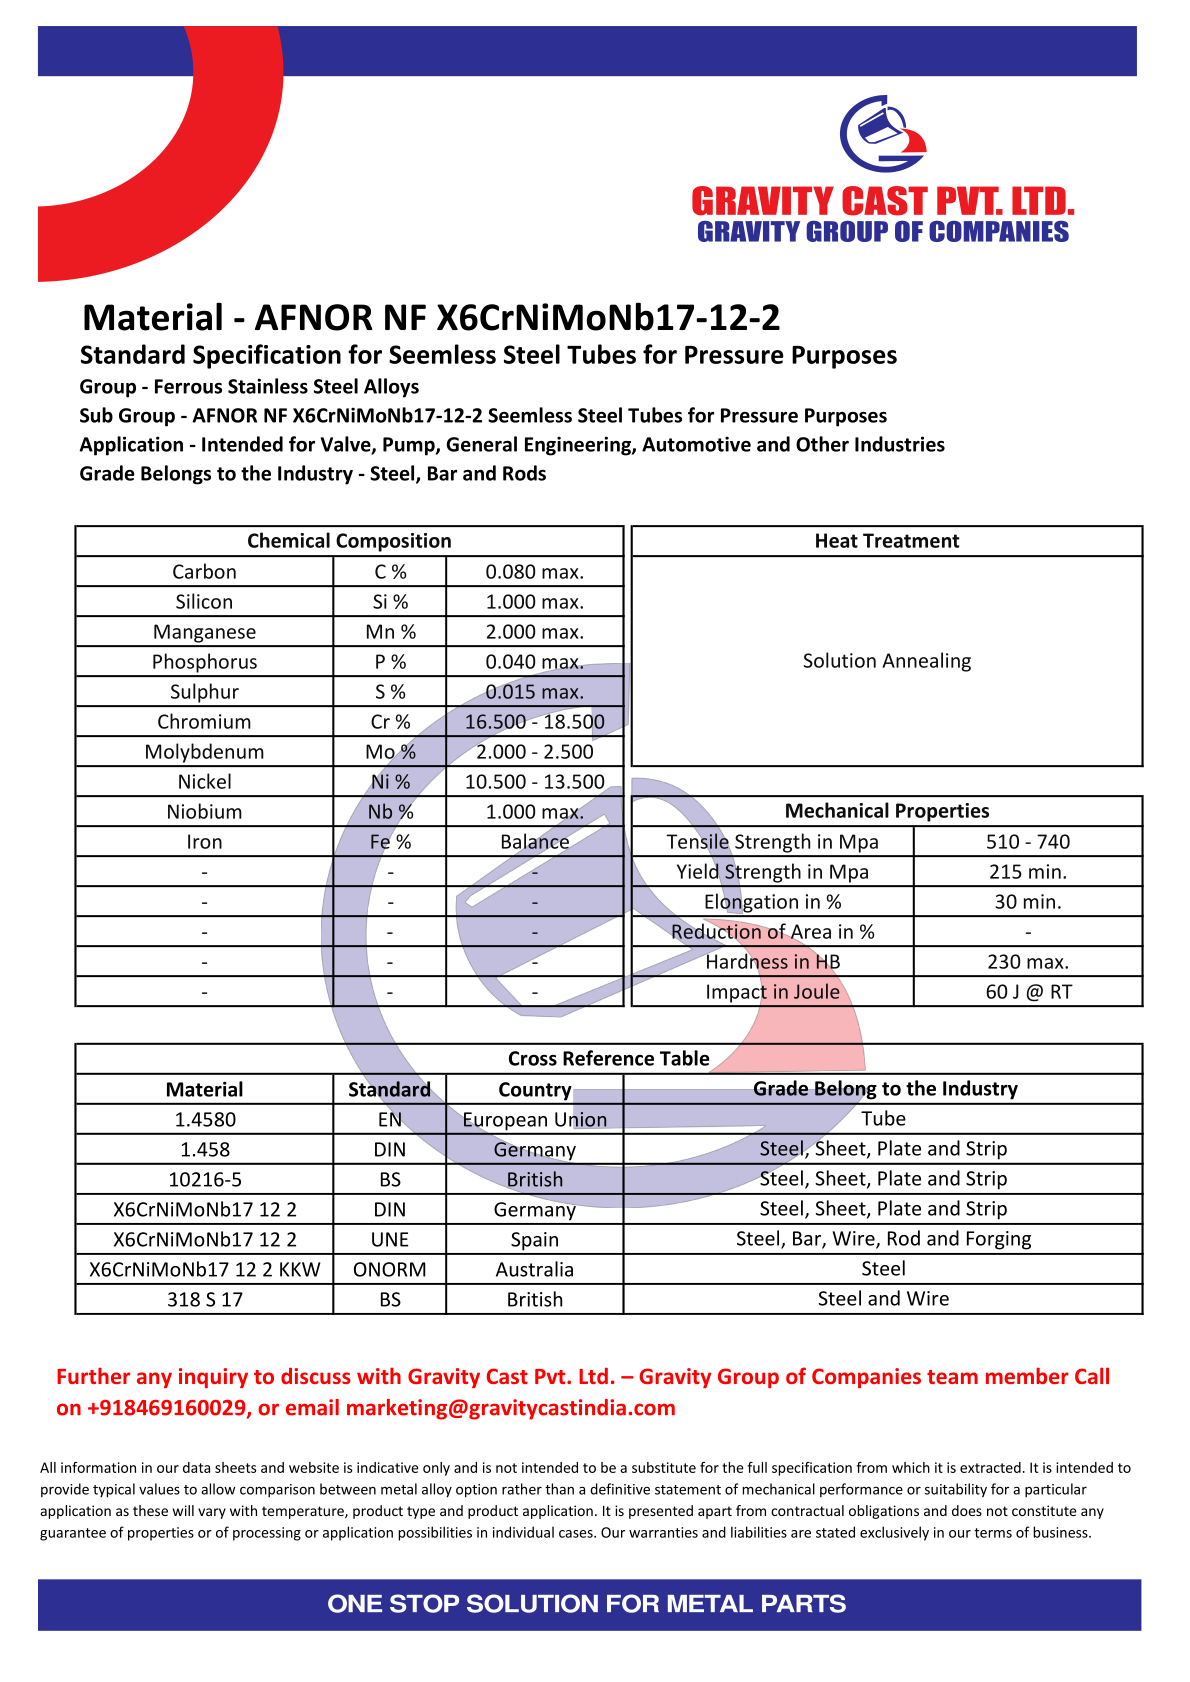 AFNOR NF X6CrNiMoNb17-12-2.pdf